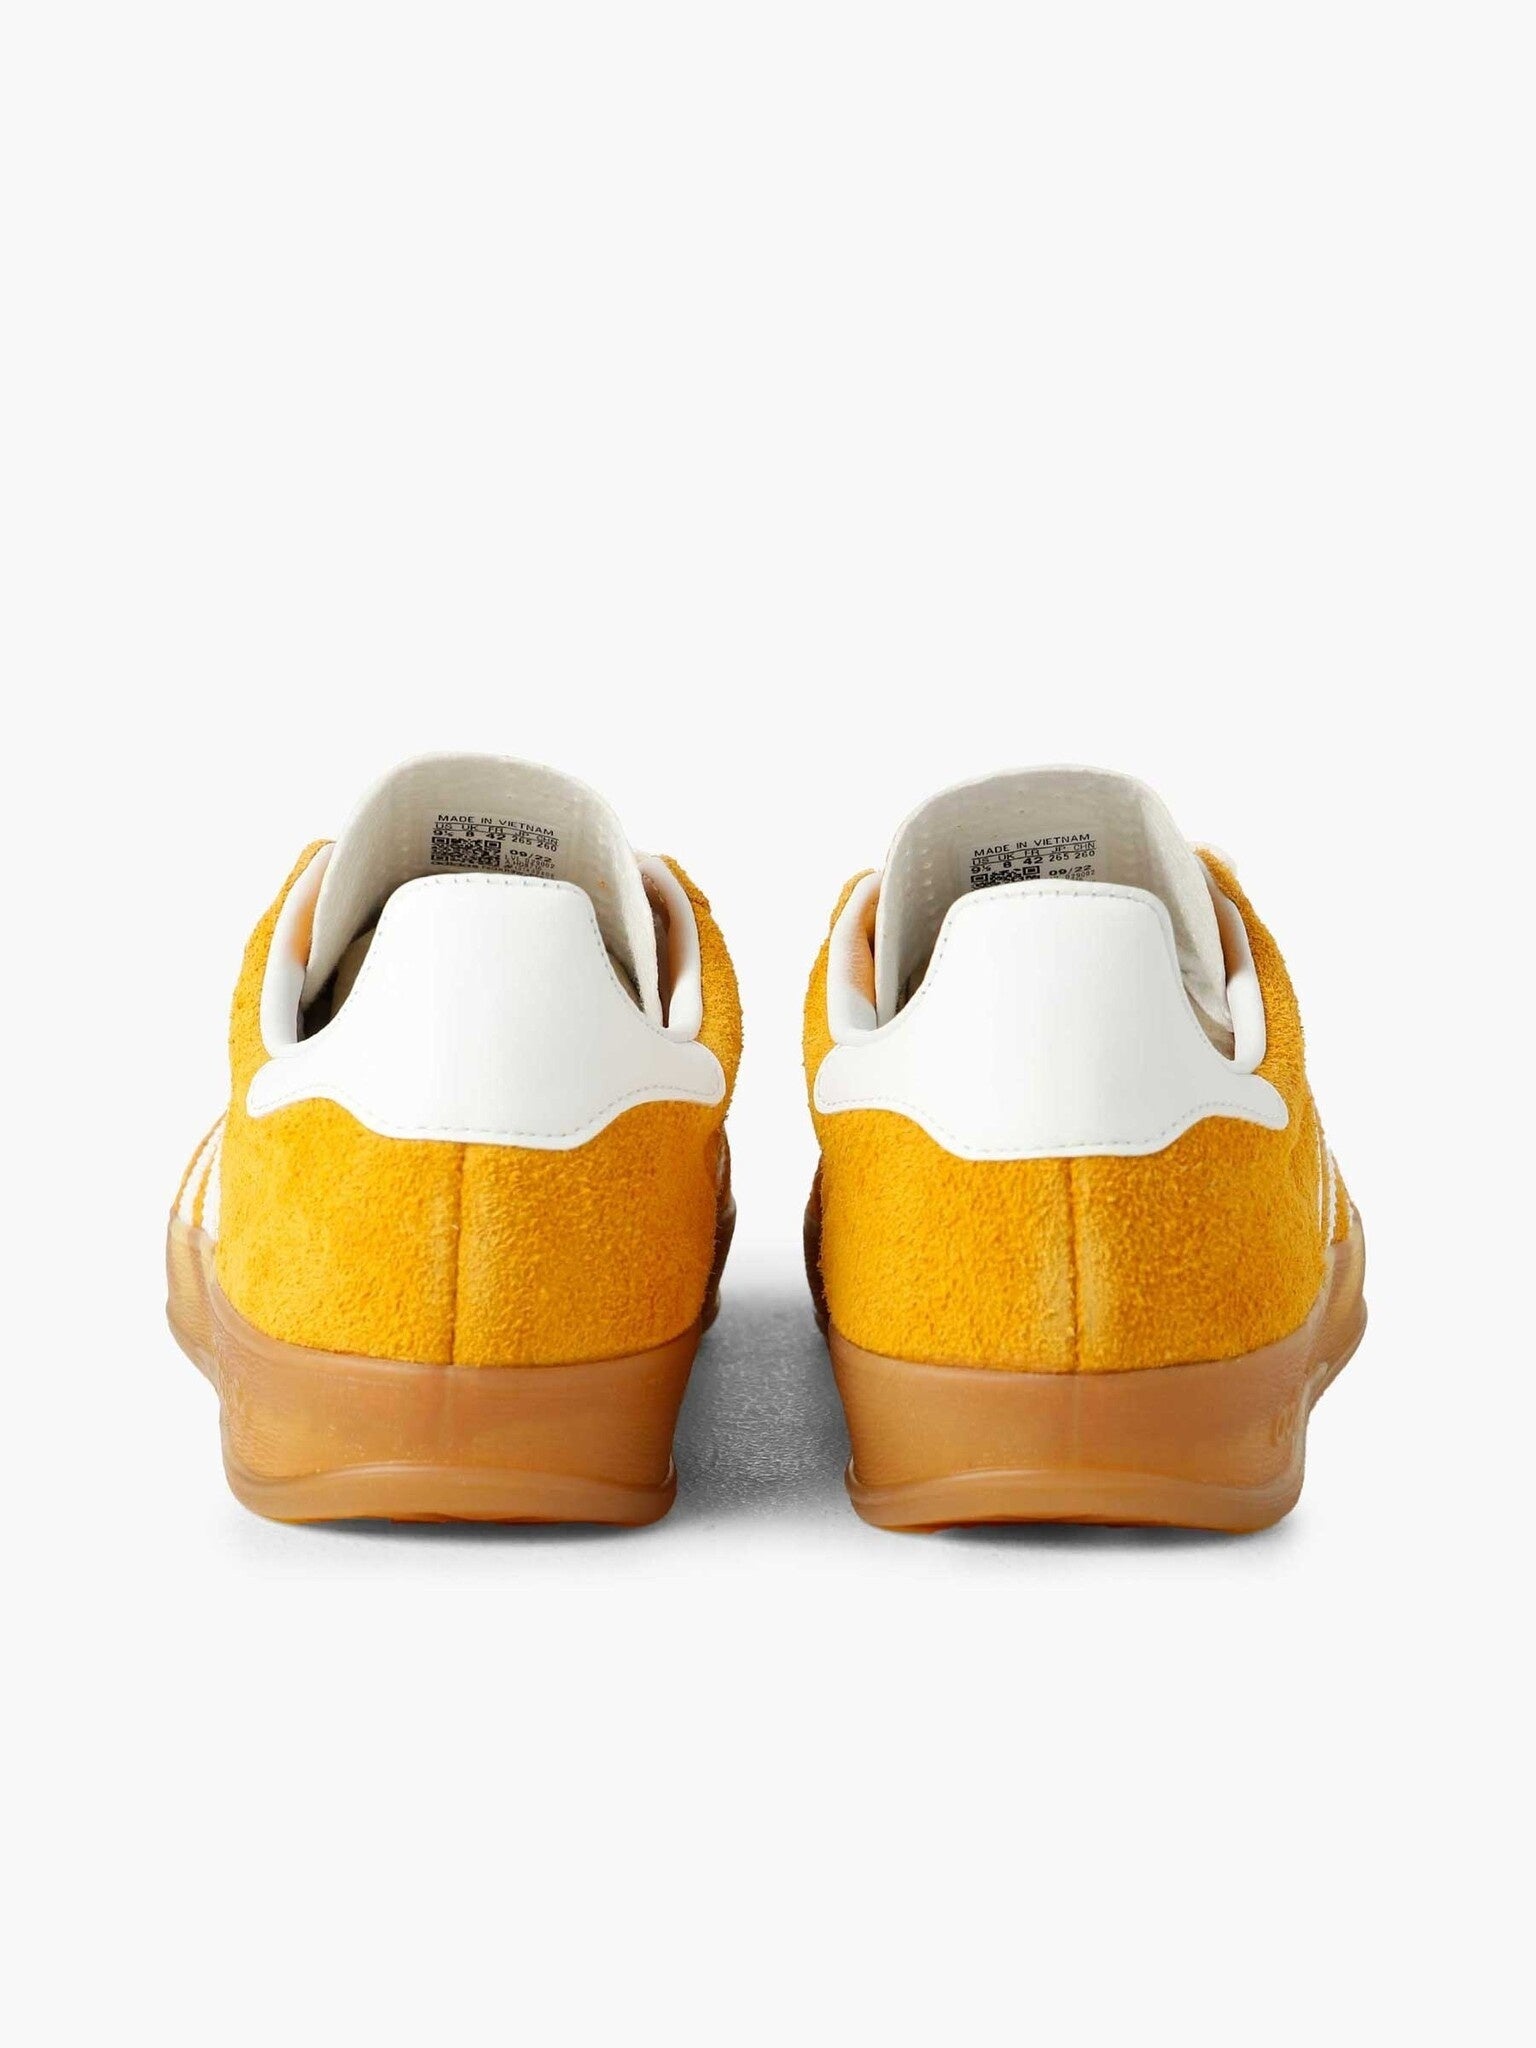 Adidas Gazelle Indoor Orange Peel 'White' (W)